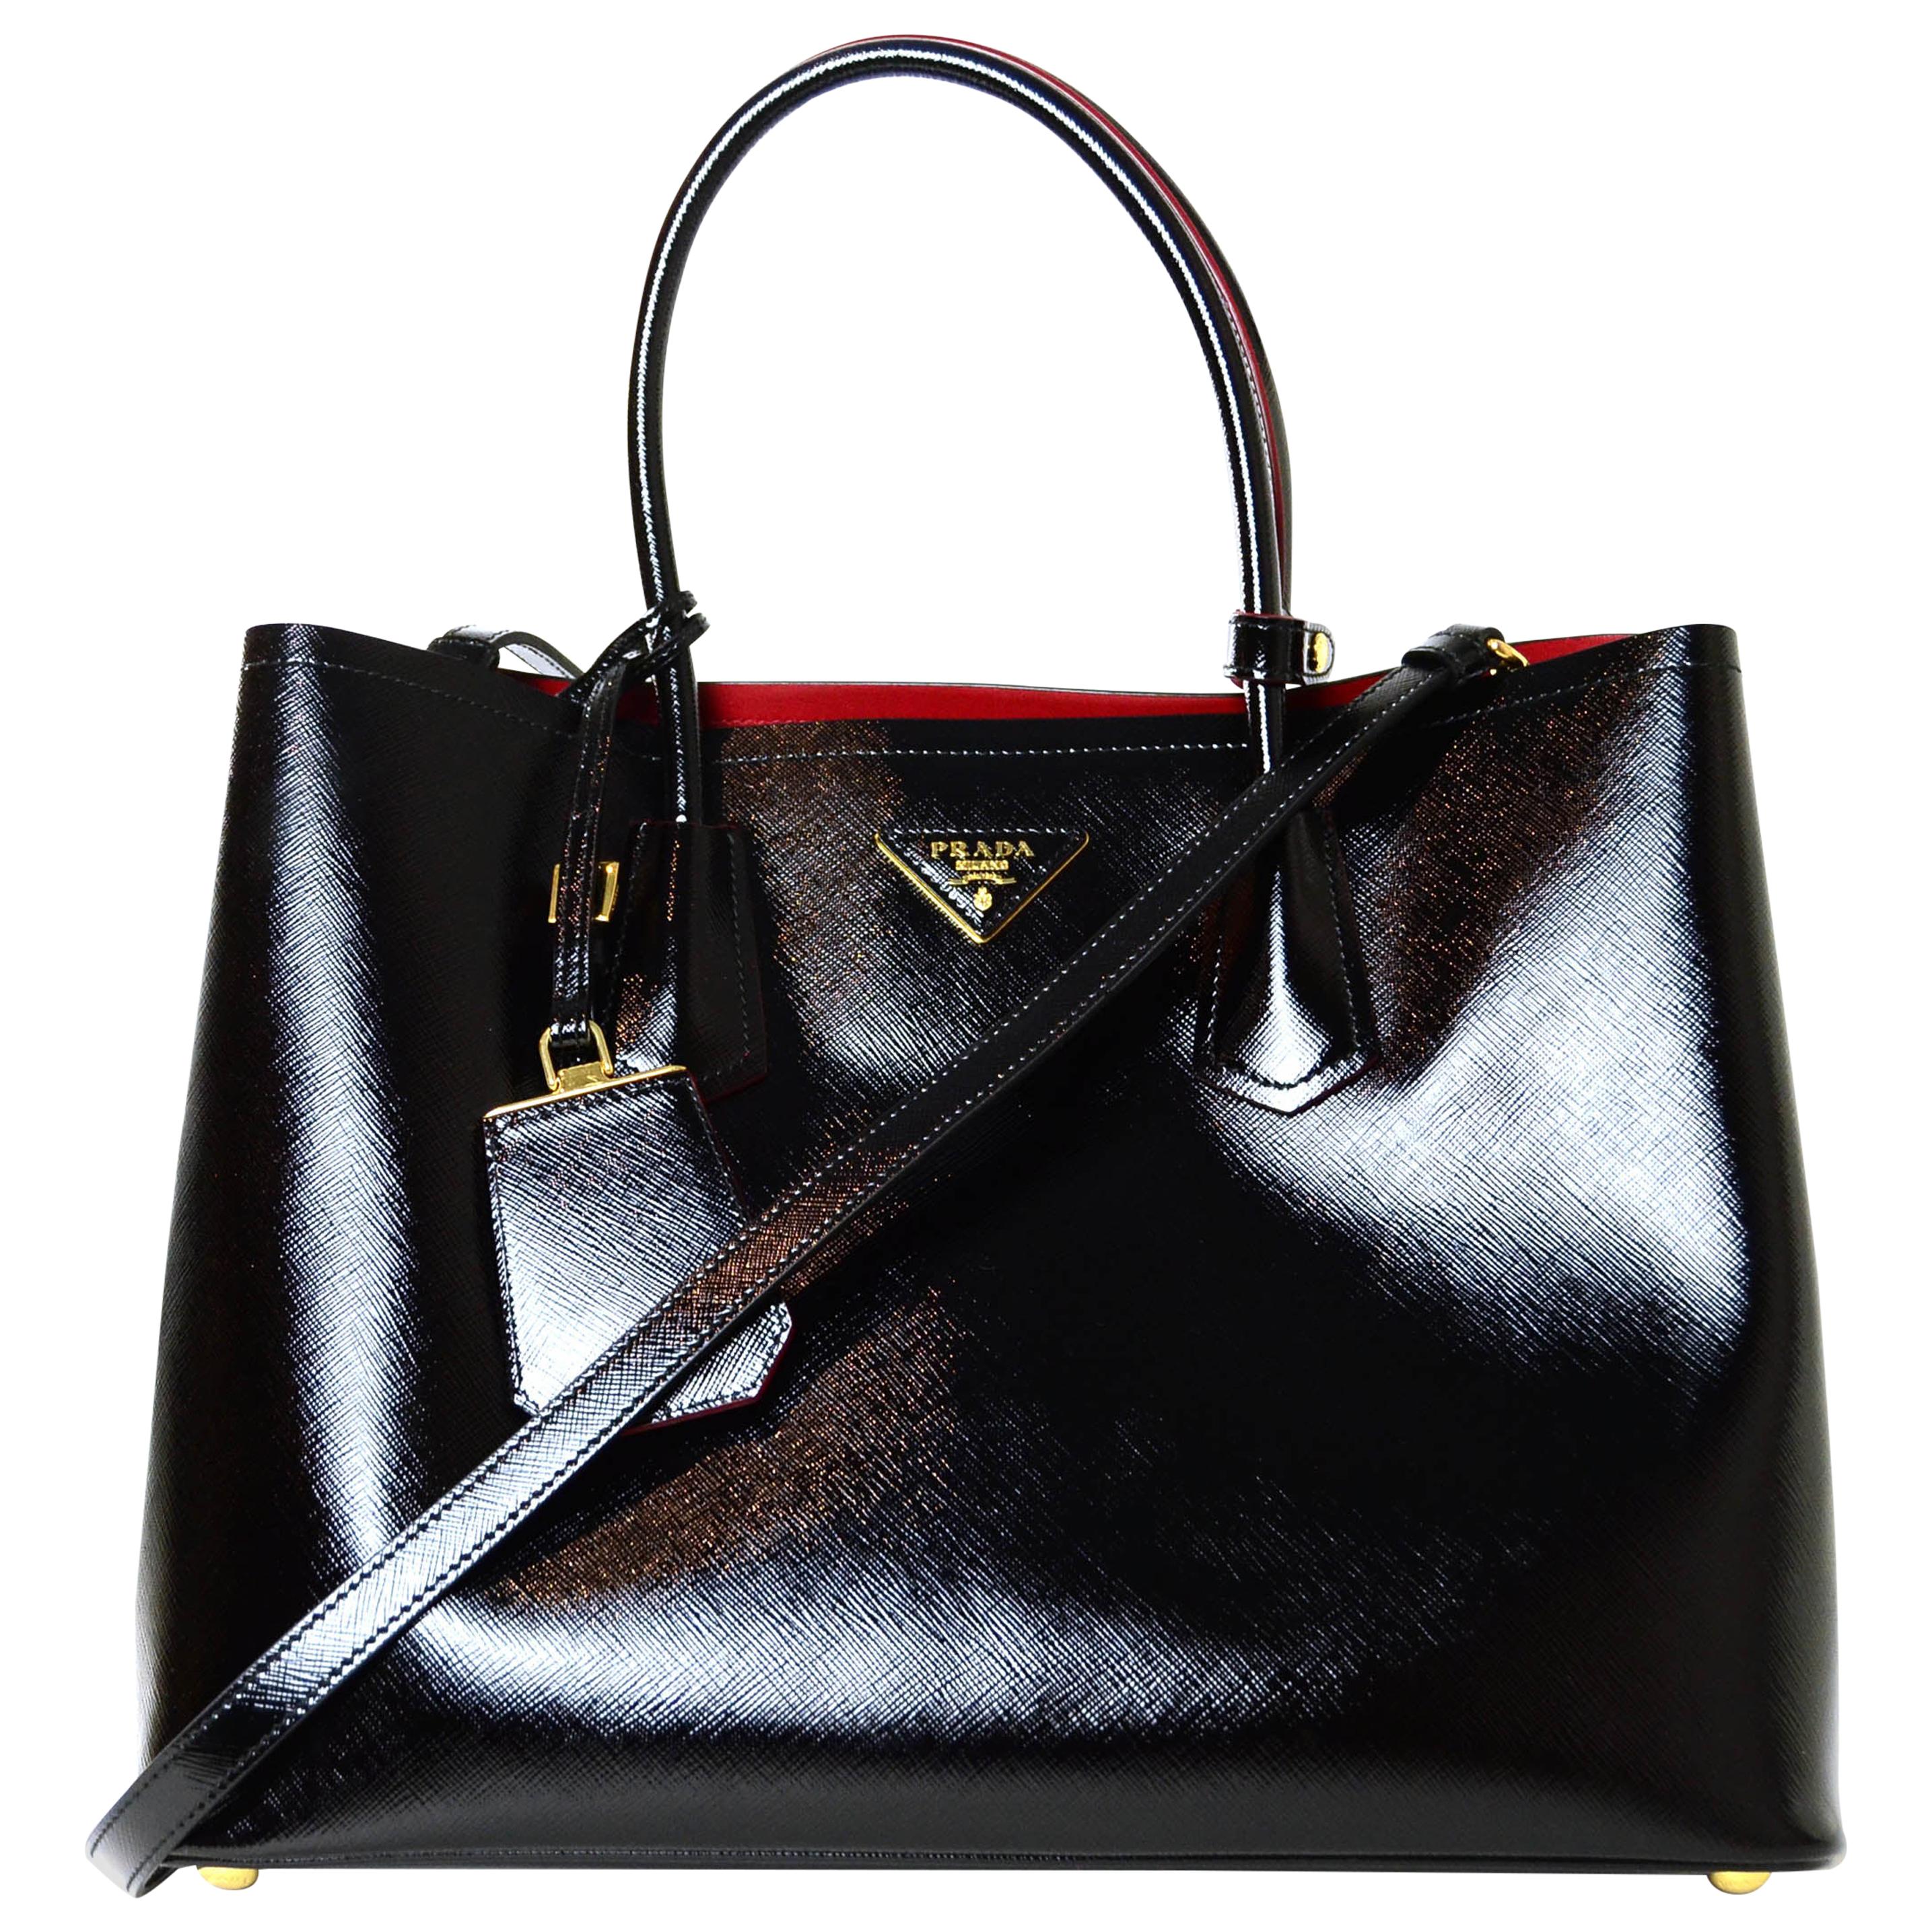 Prada Saffiano Vernice Black Leather Crossbody Bag